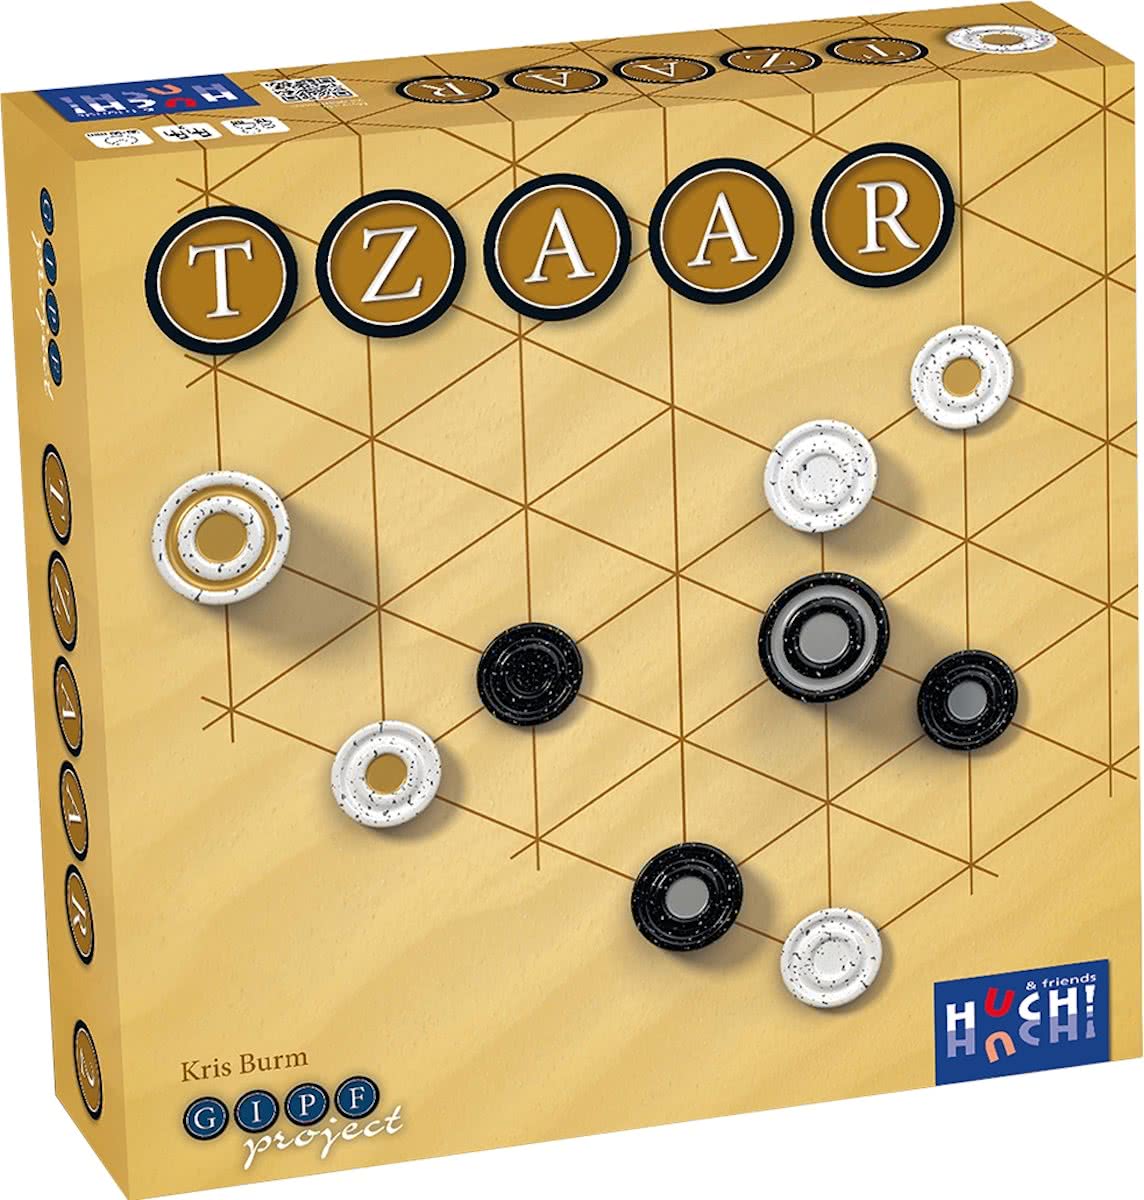 TZAAR description reviews